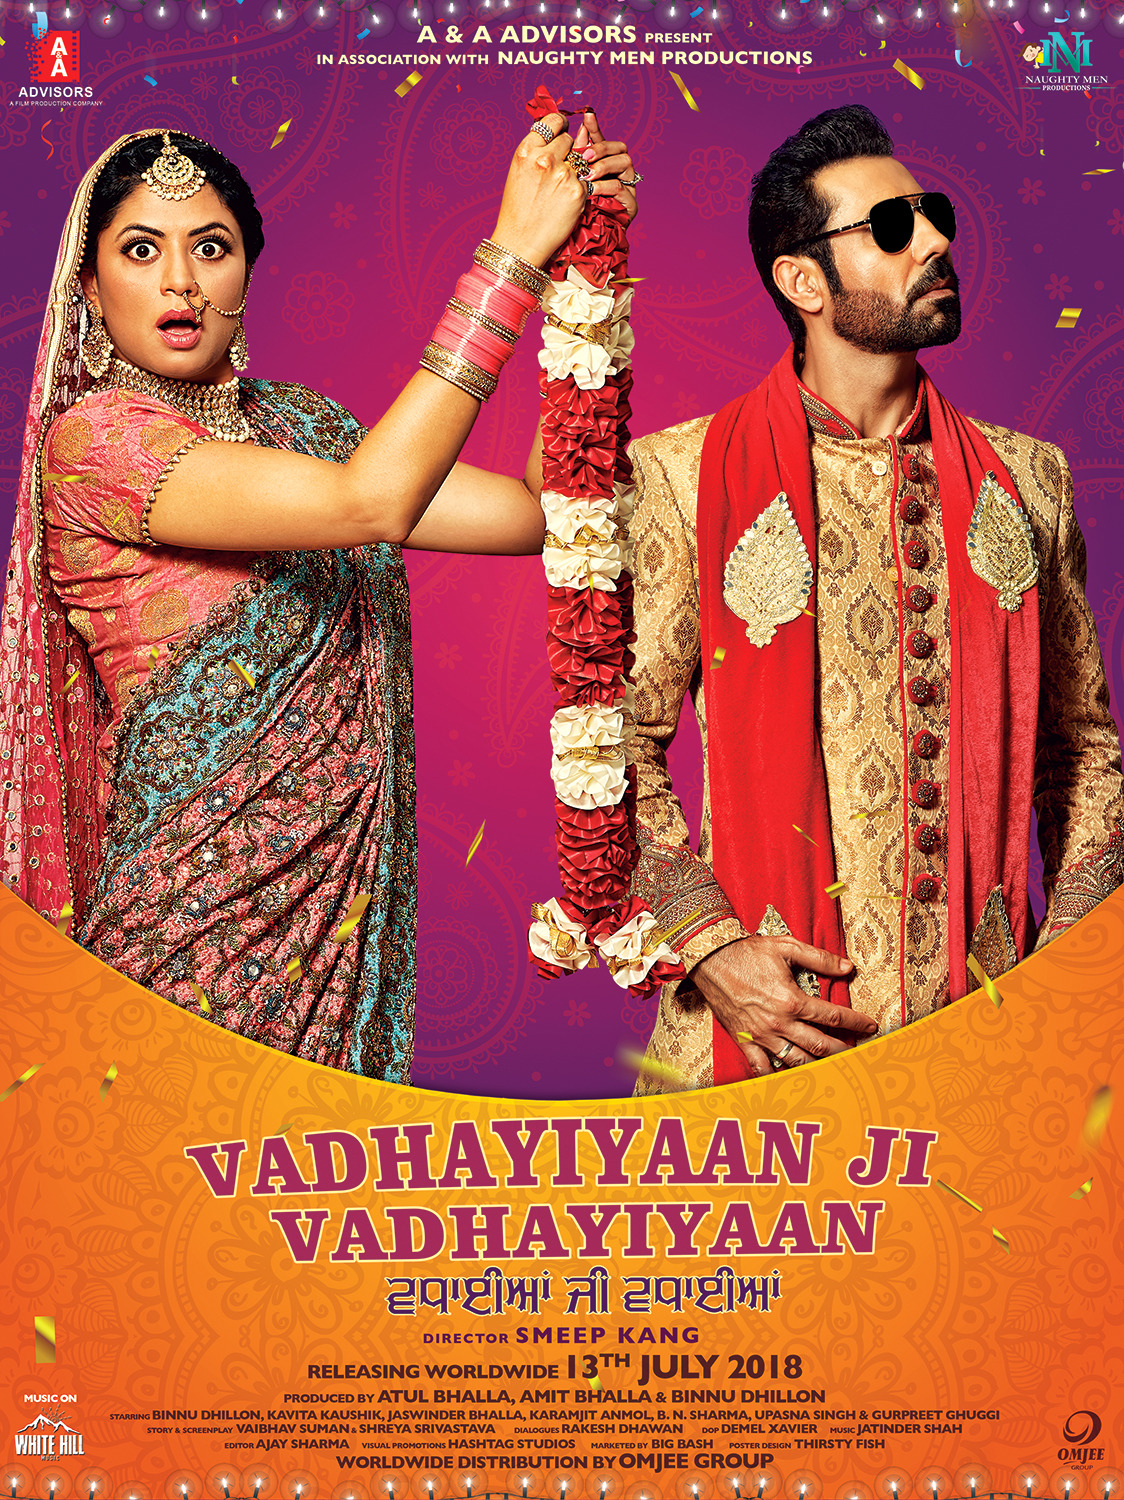 Extra Large Movie Poster Image for Vadhayiyaan Ji Vadhayiyaan (#1 of 2)